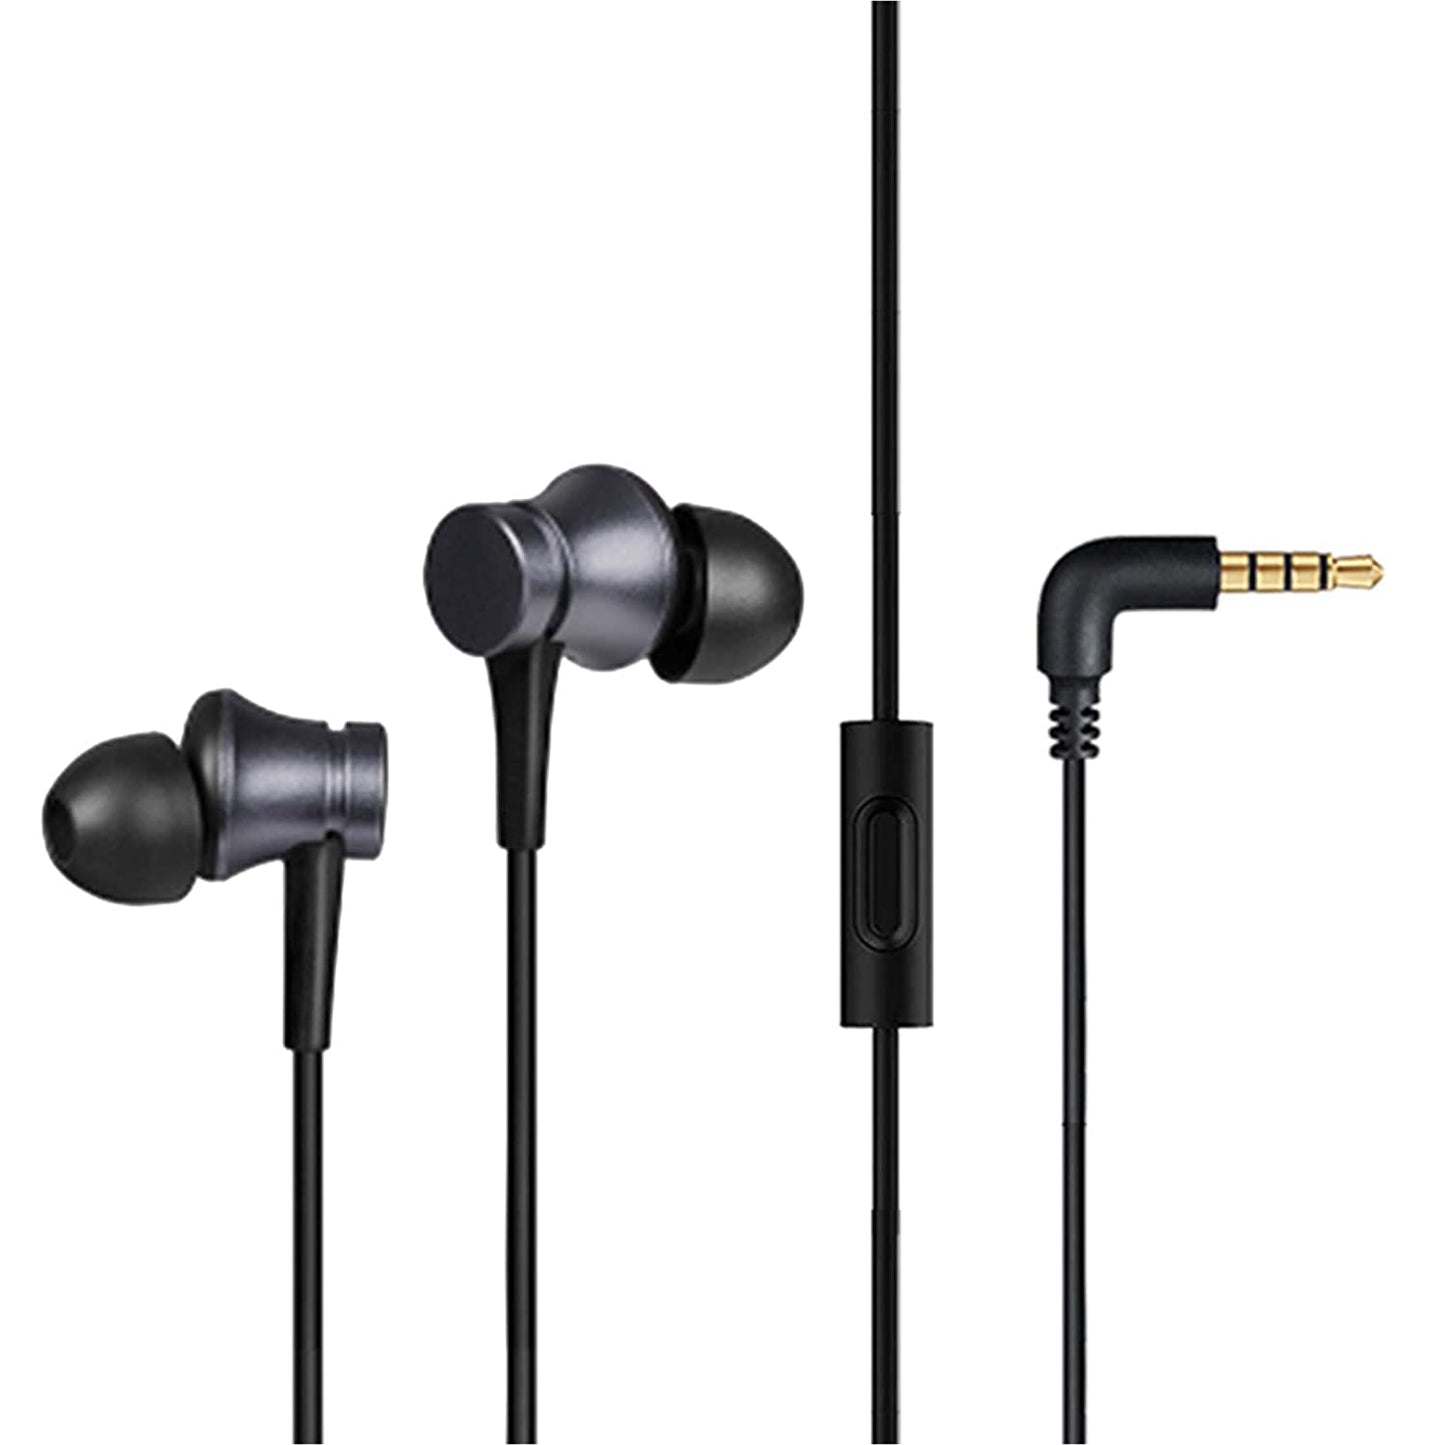 Earphones, Xiaomi Mi Wired in Ear with Mic Basic Headphone | Aluminum Alloy Sound Chamber | Ultra Deep Bass  (Black)